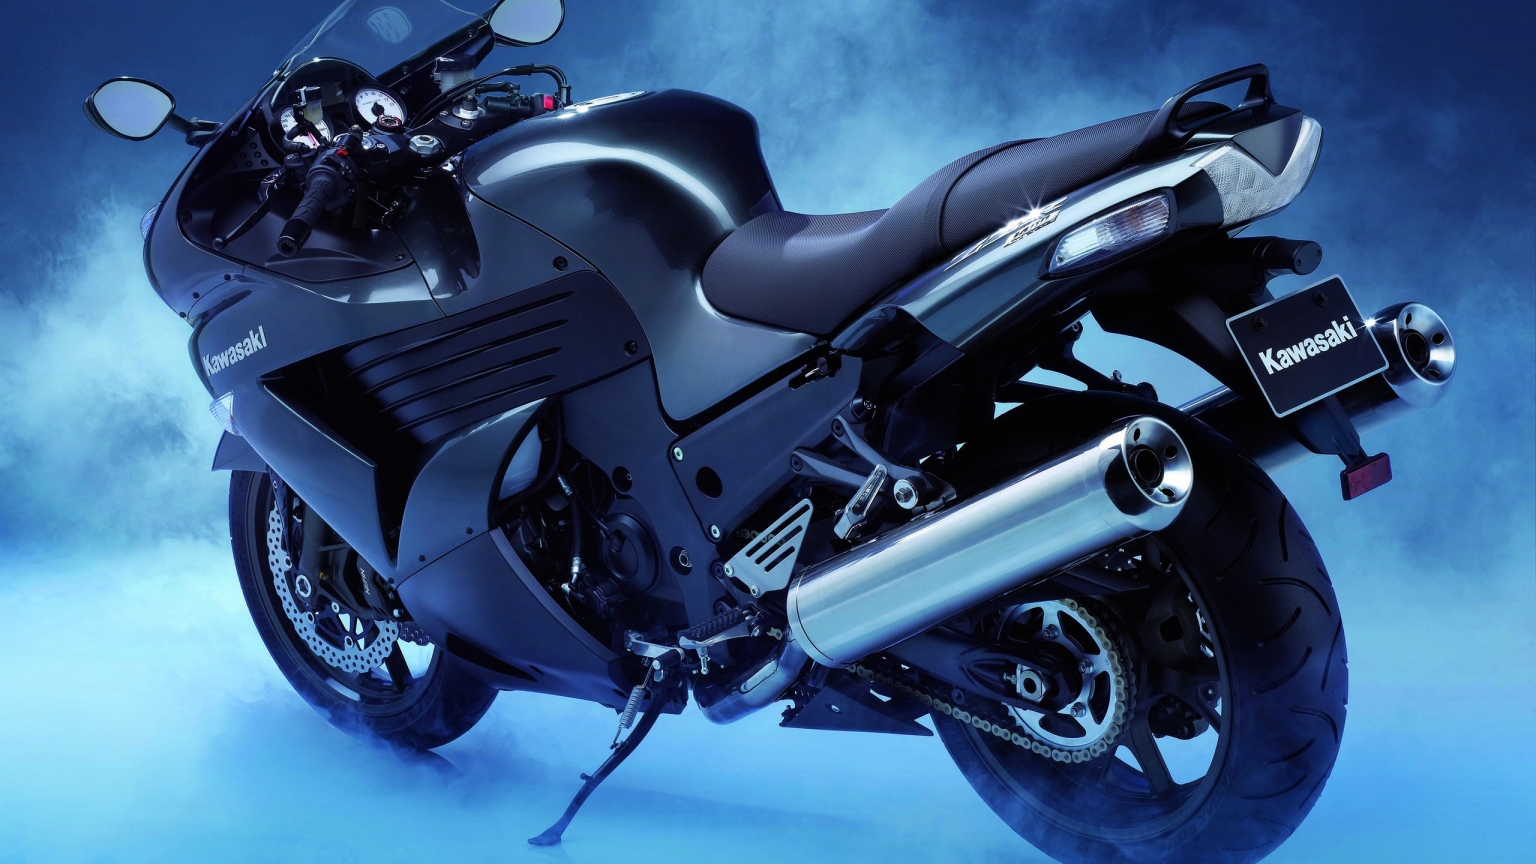 Kawasaki Ninja Black for 1536 x 864 HDTV resolution